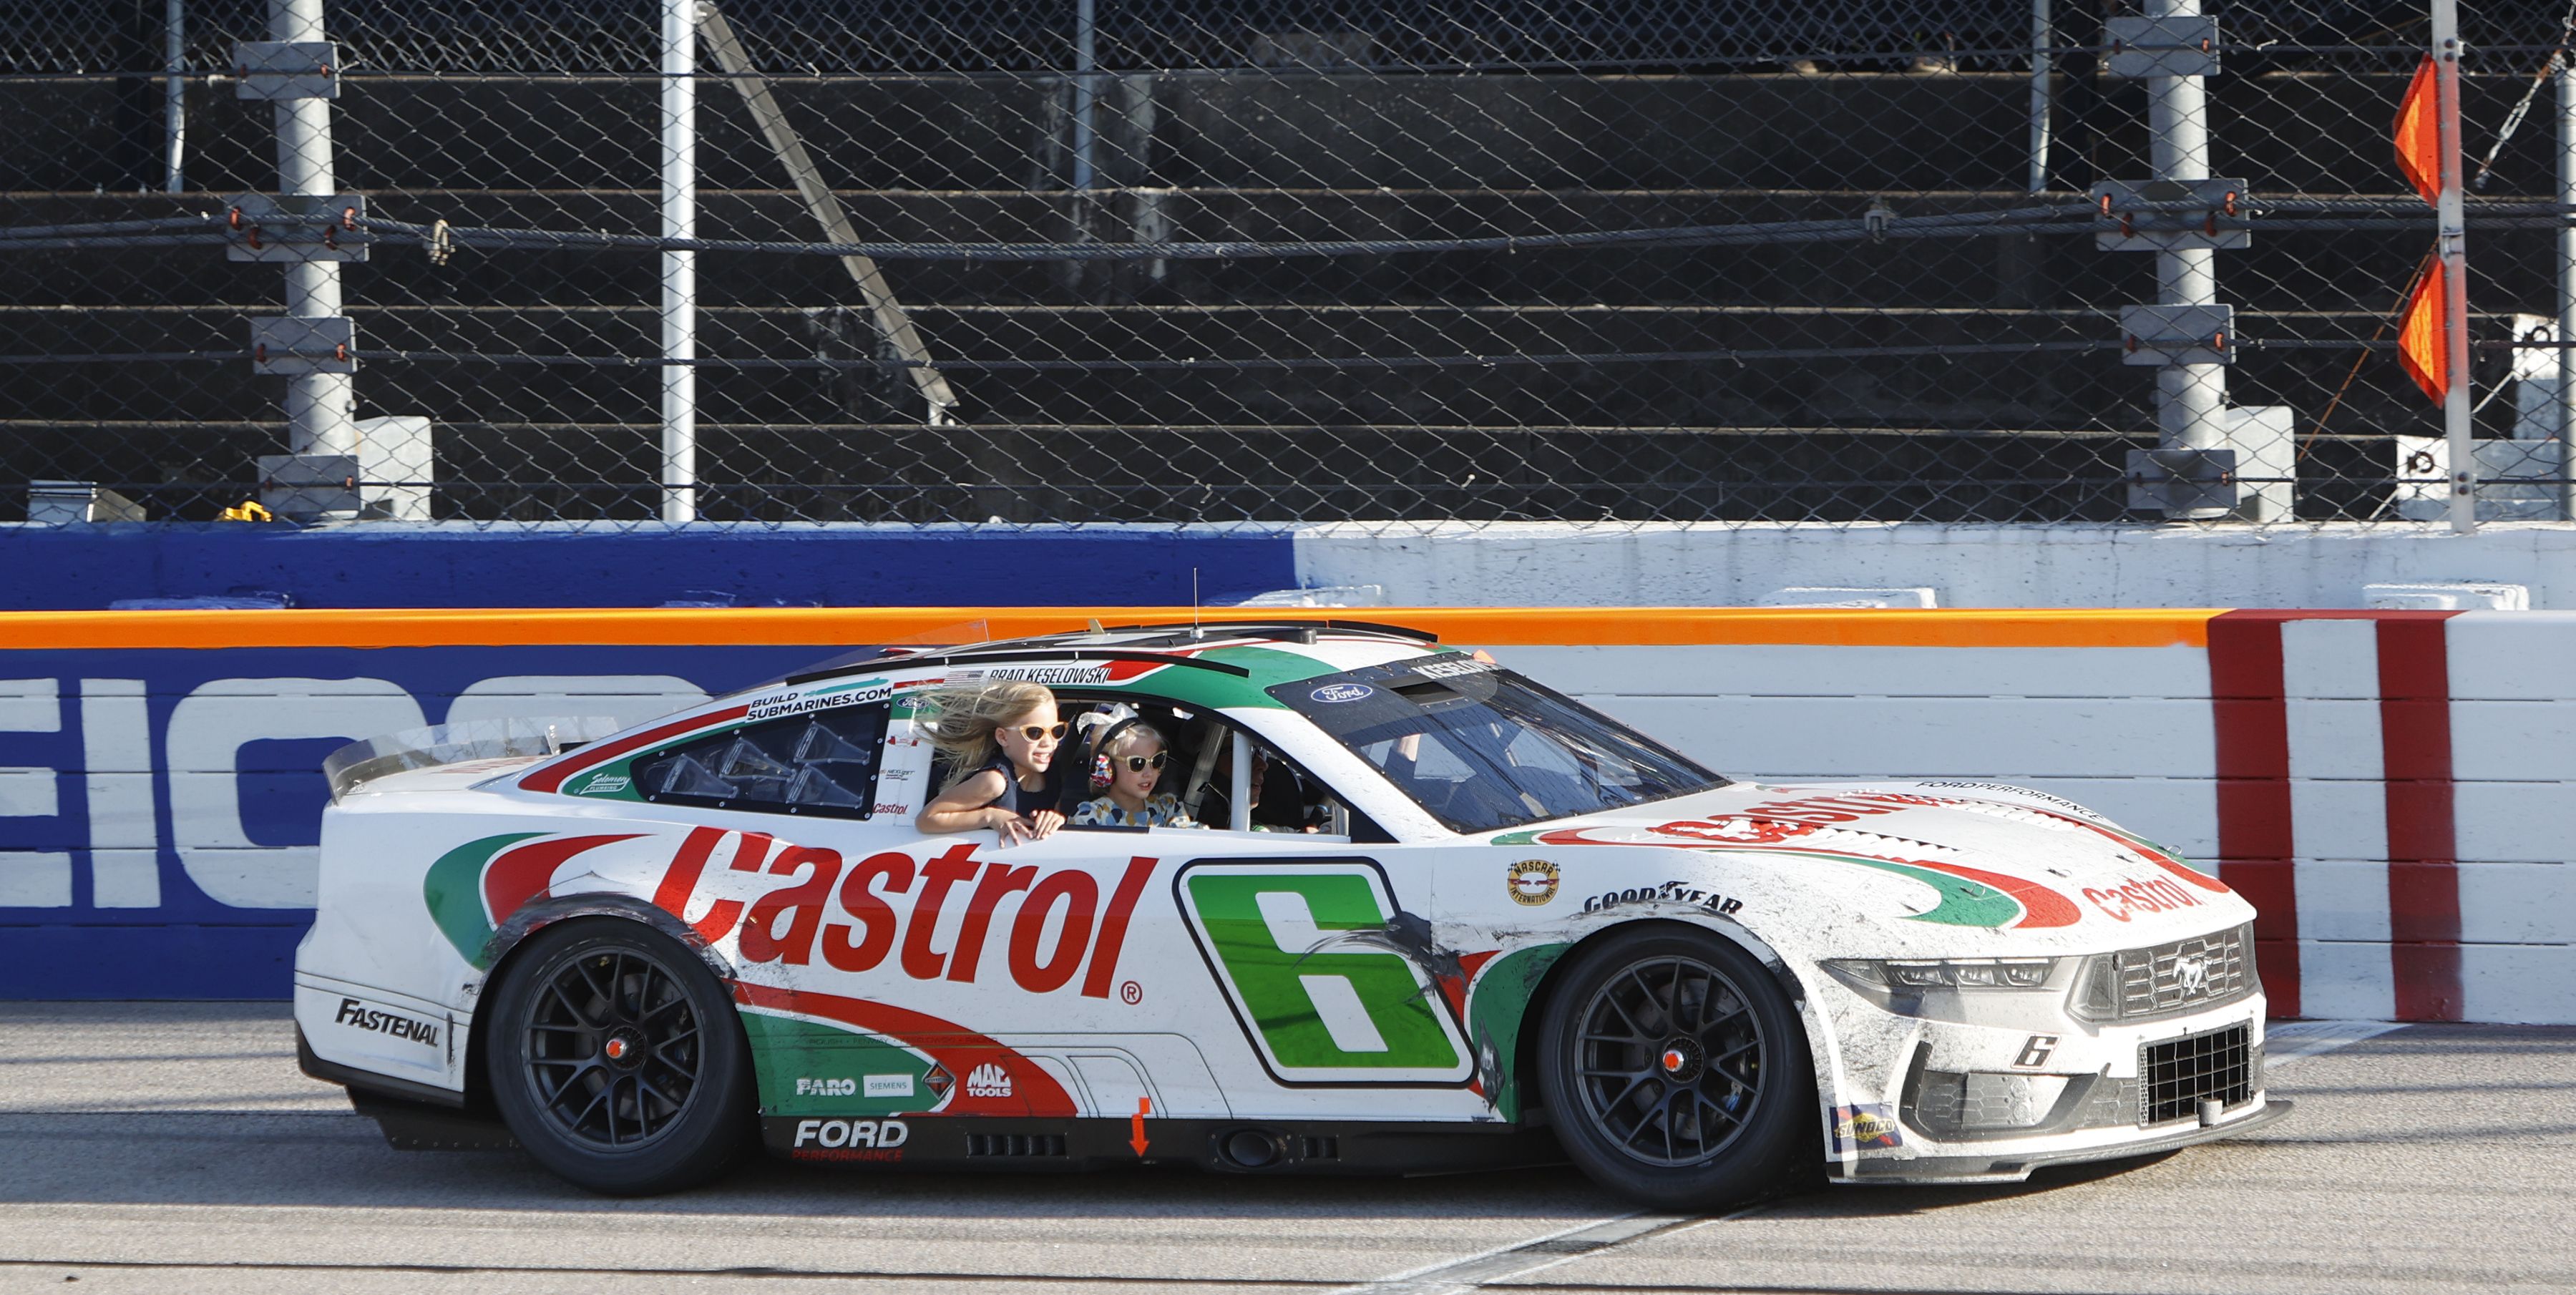 Analysis: Brad Keselowski's Darlington NASCAR Win Capped 'a Tedious, Painful Process'